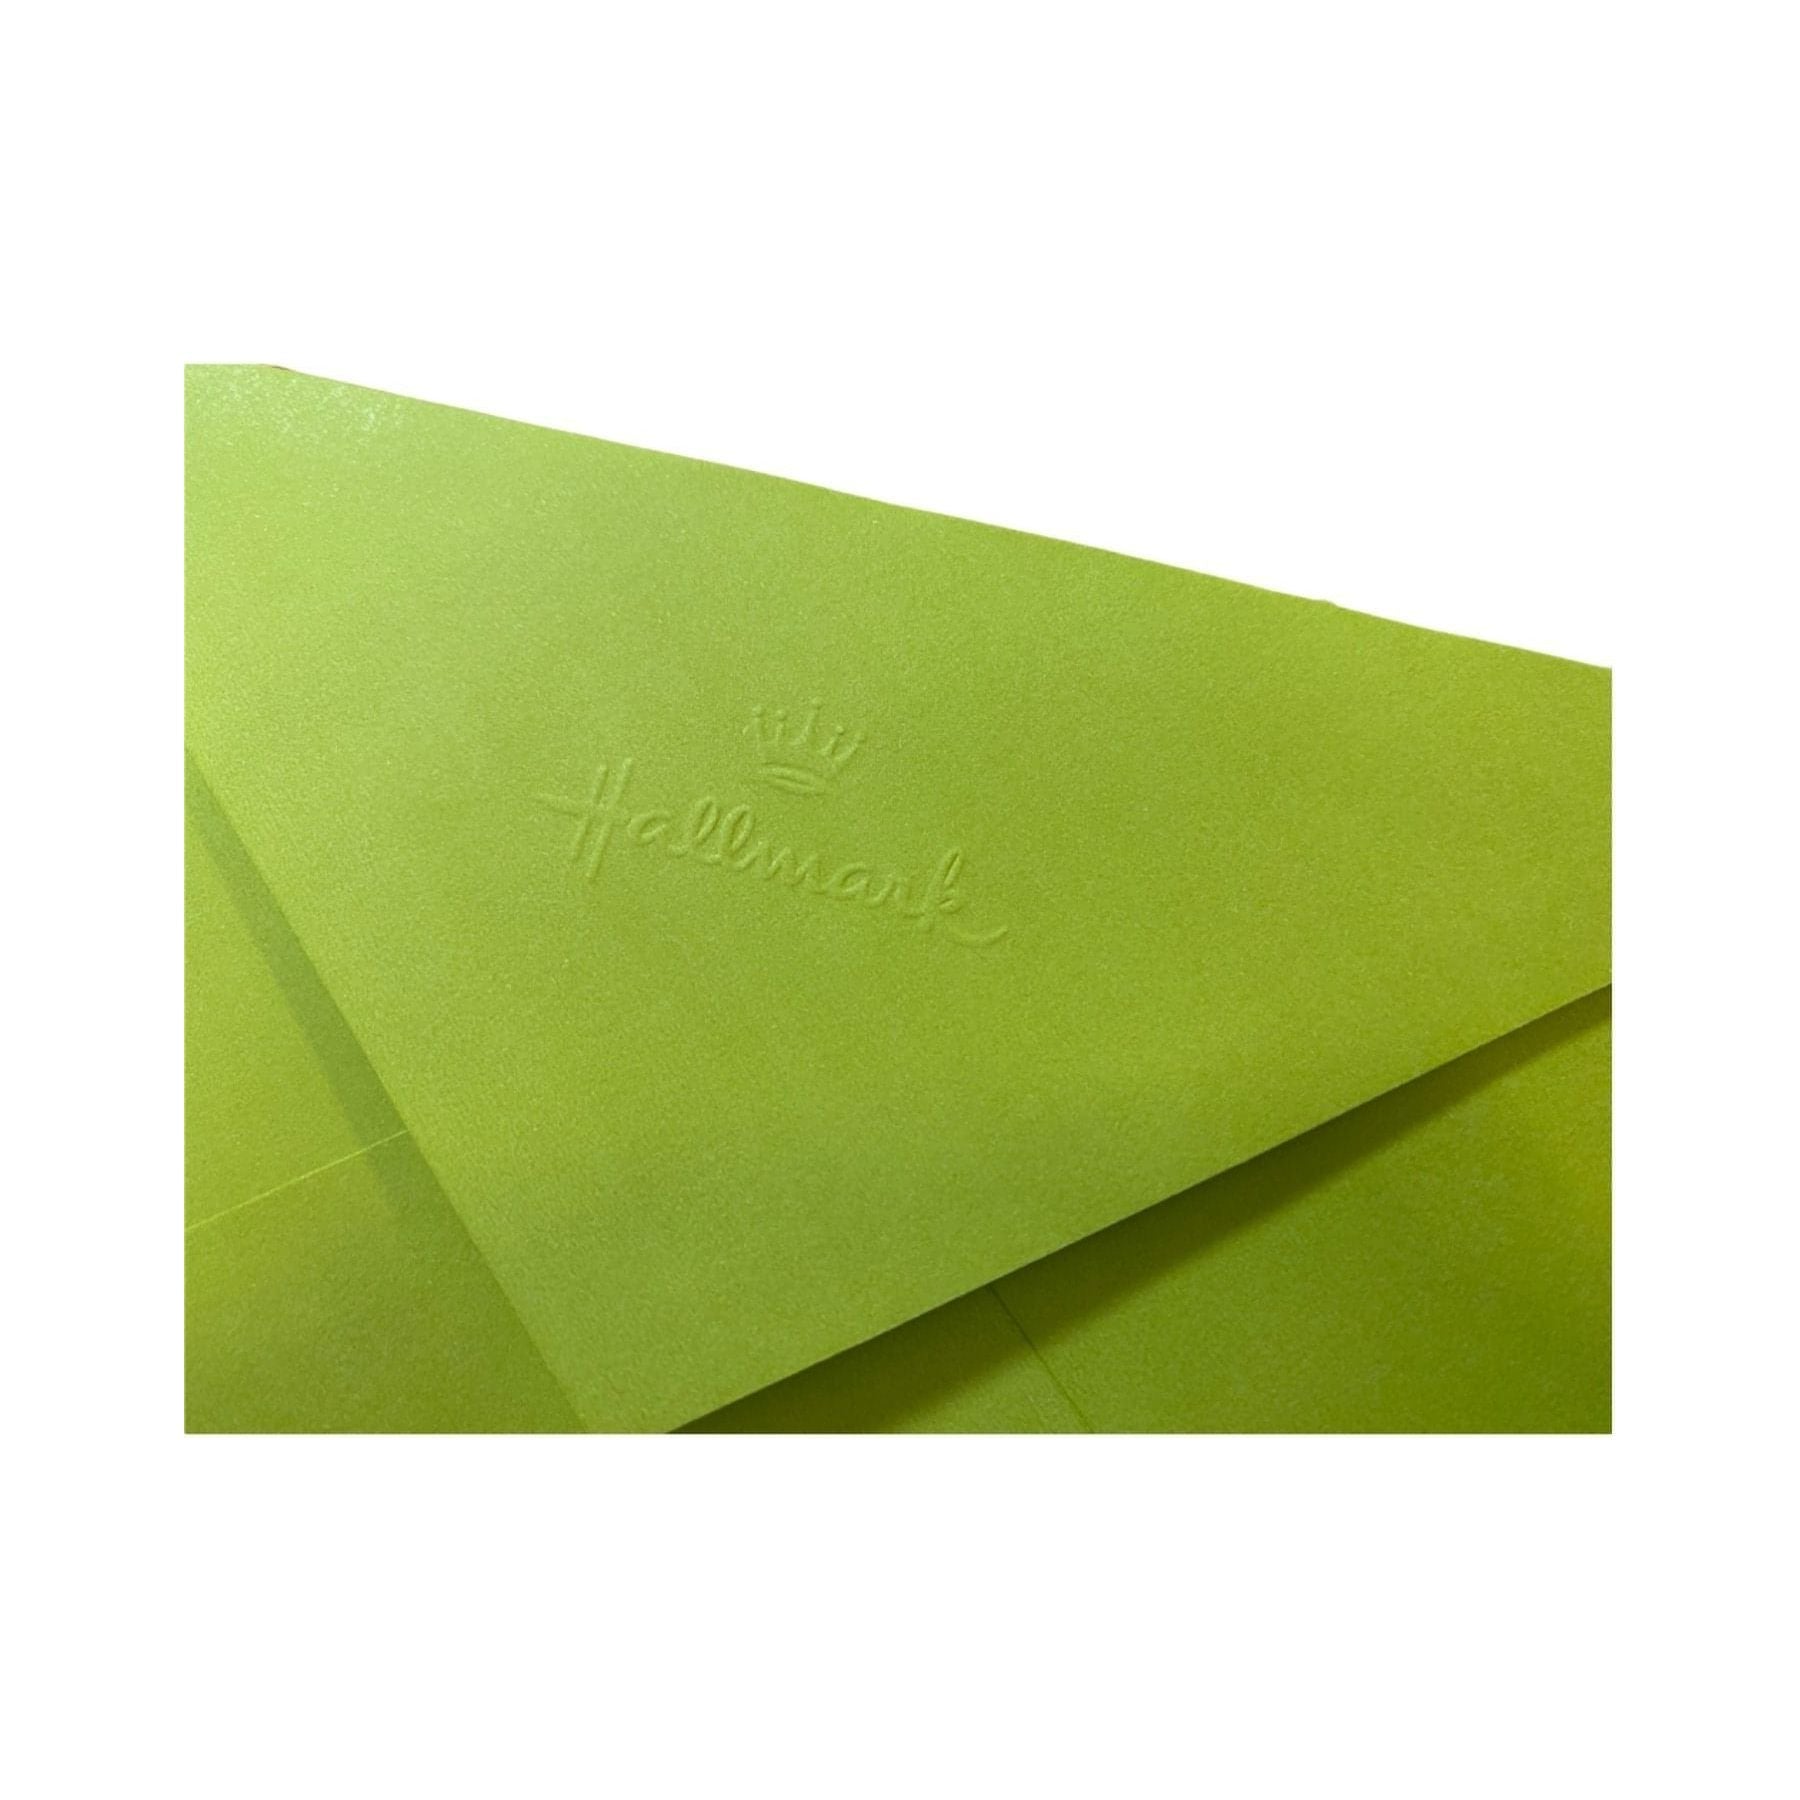 Hallmark-Birthday Card with Envelope - Heartline by Hallmark - "Social Media" - Brandat Outlet